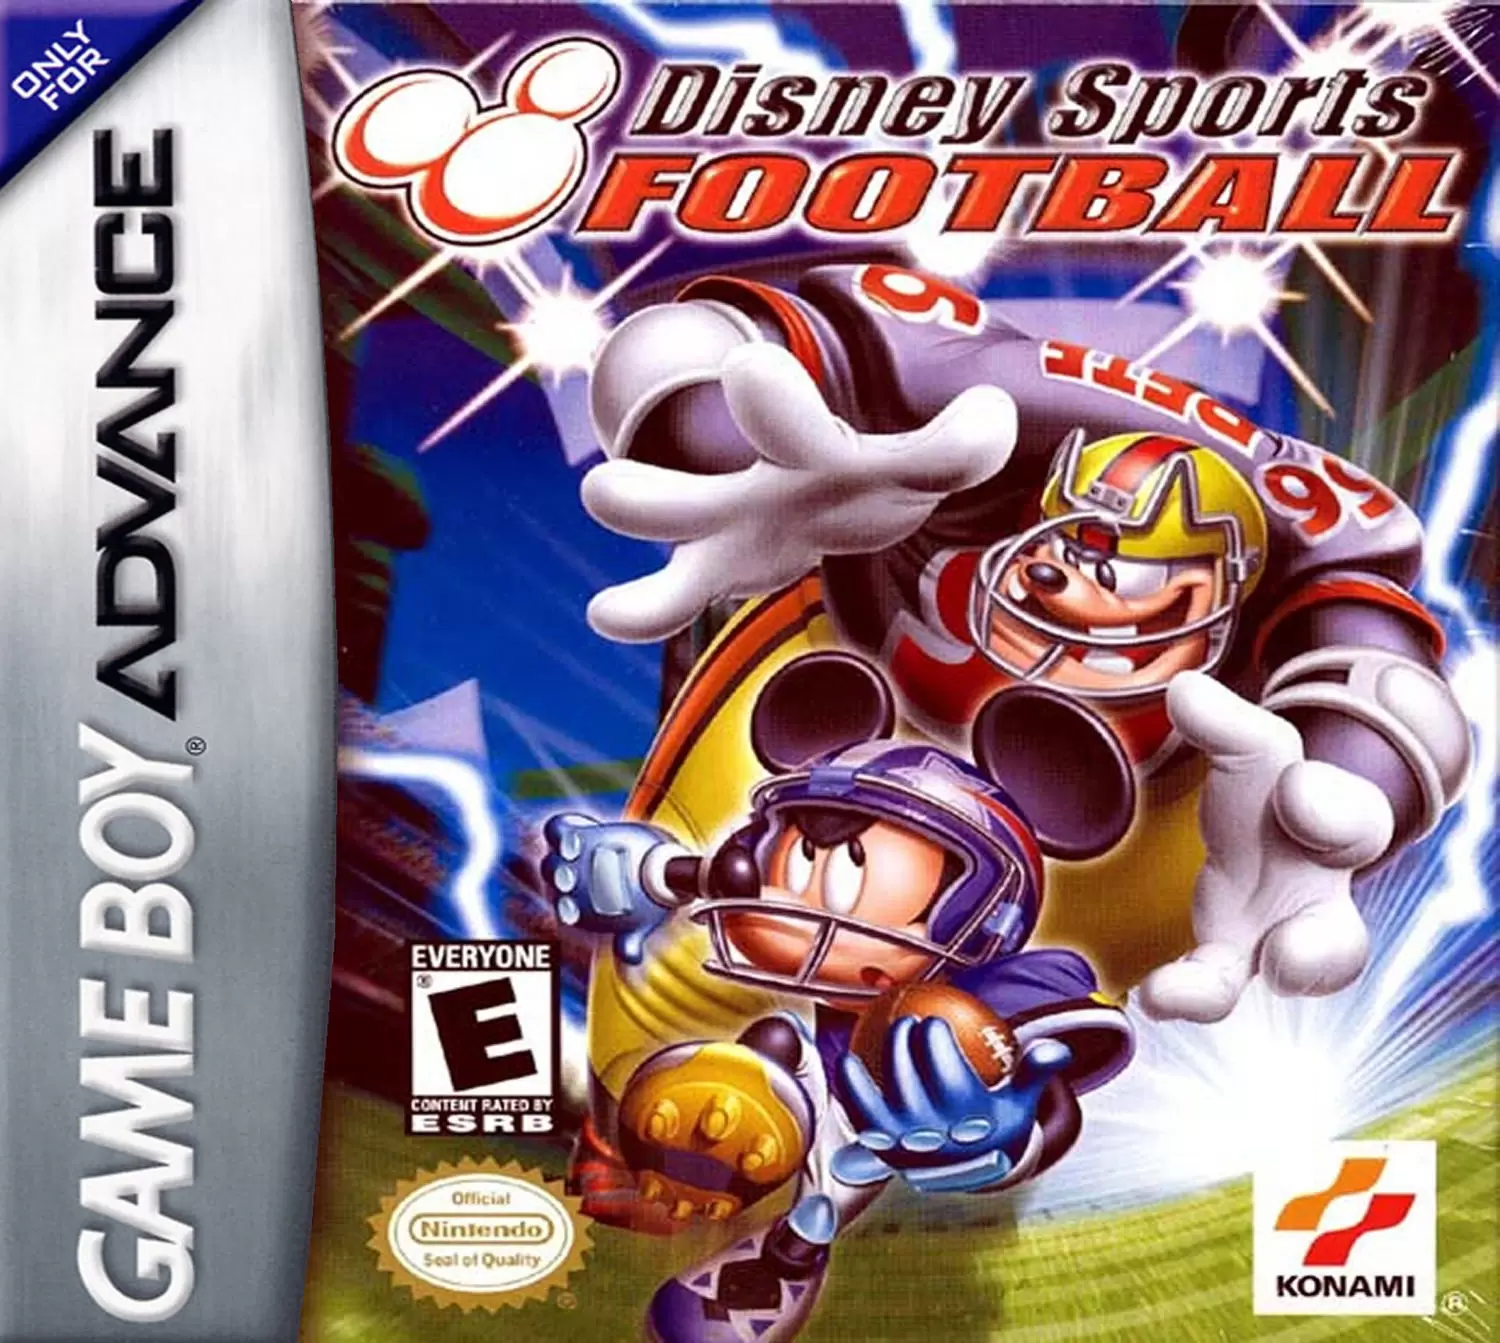 Game Boy Advance Games - Disney Sports: Football